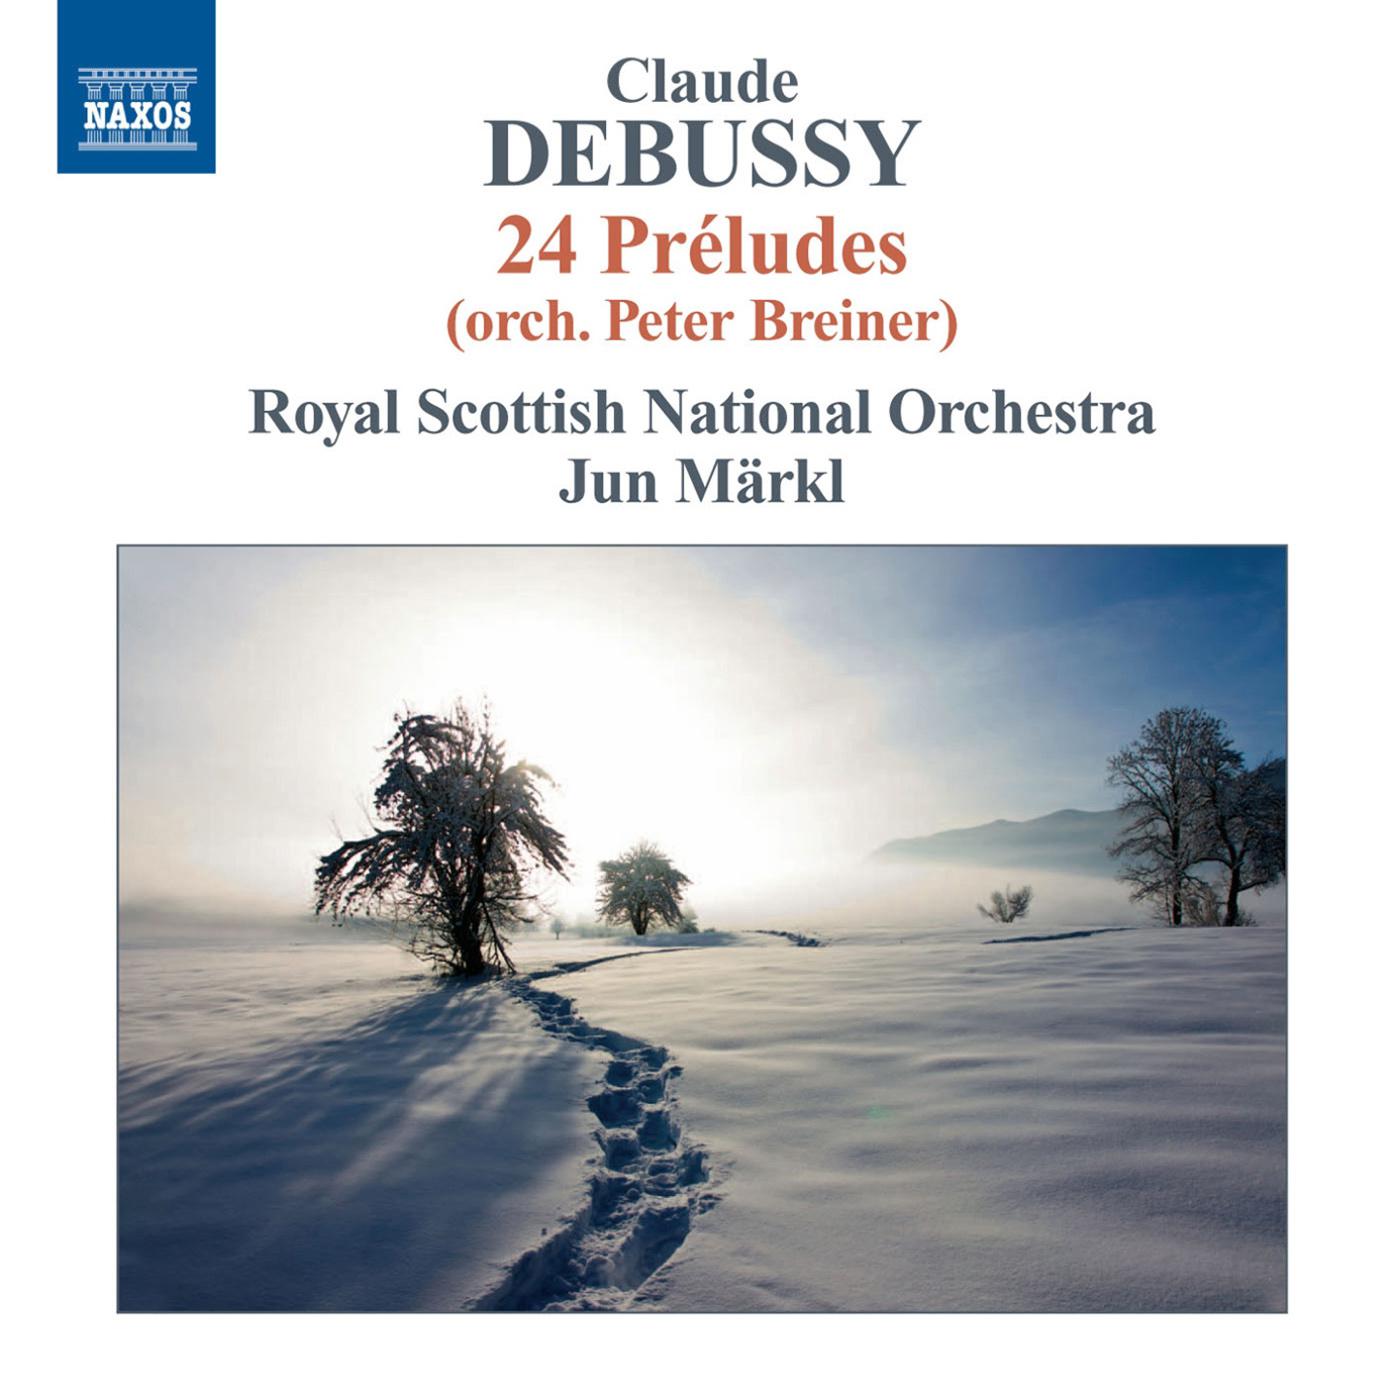 Preludes, Book 2 (arr. P. Breiner for orchestra): No. 12. Feux d'artifice Preludes, Book 2 (arr. P. Breiner for orchestra)